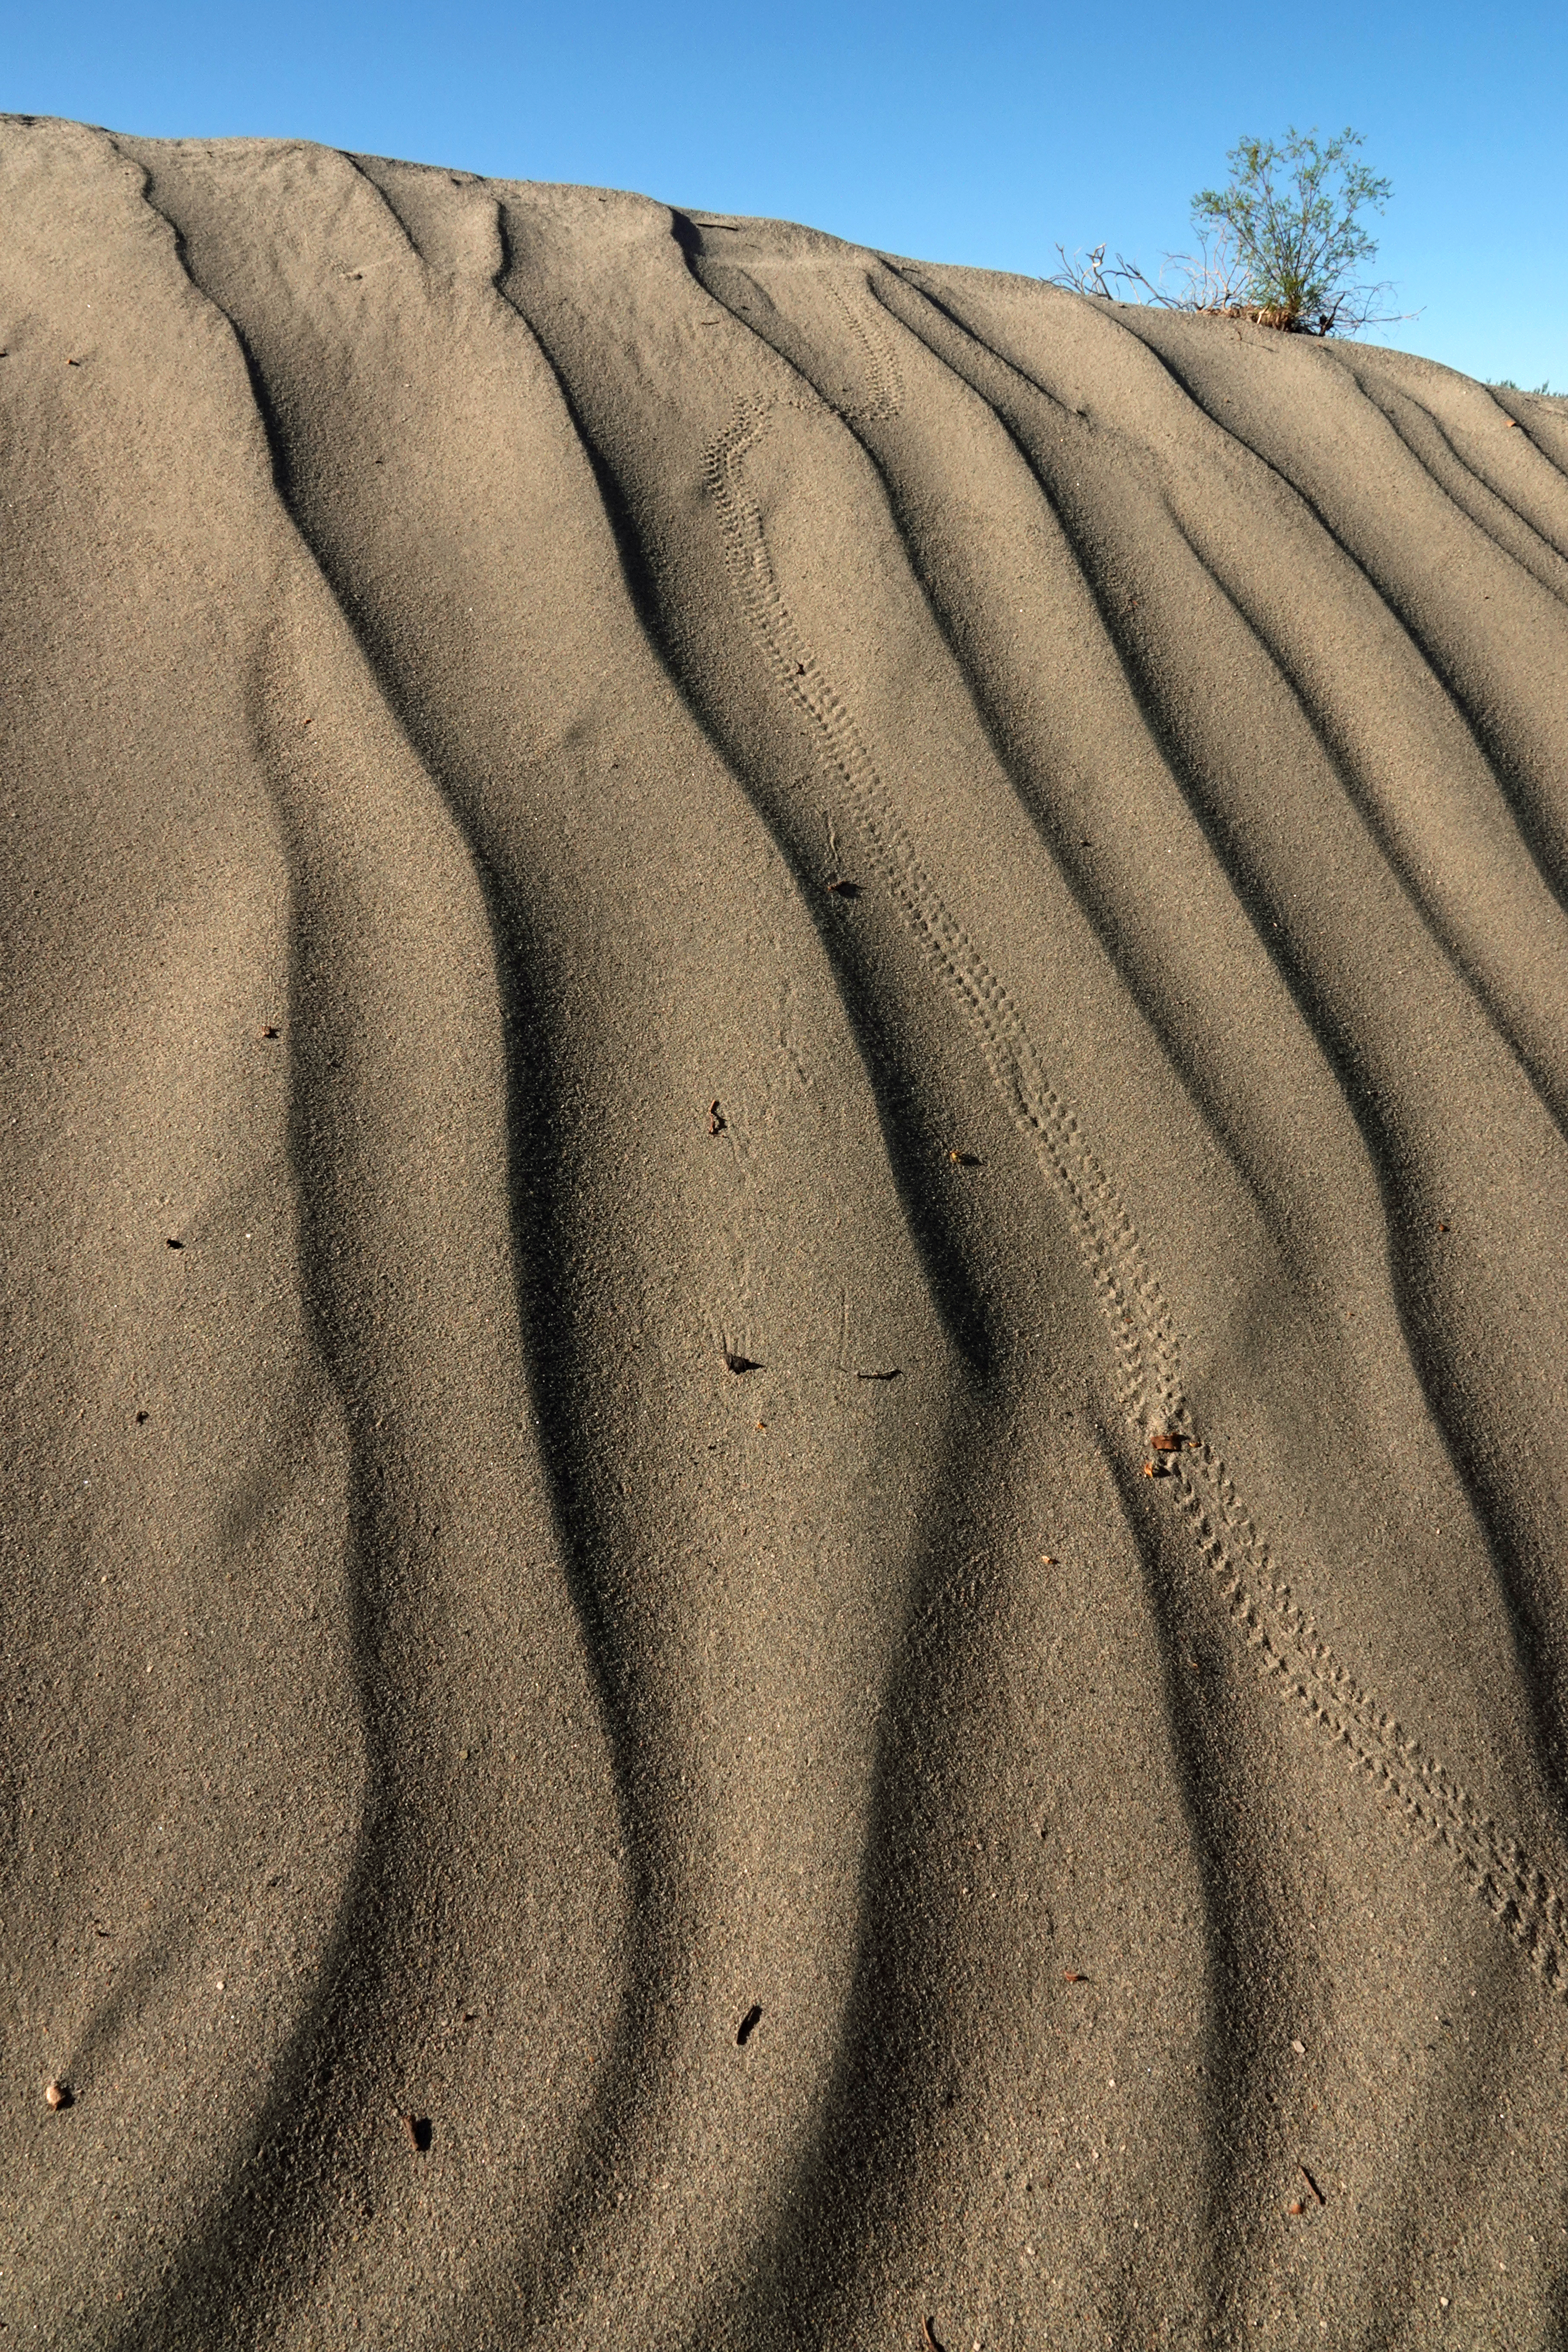 Sand dune ridges, animal tracks  -  Mesquite Flat Sand Dunes, Death Valley National Park, California  